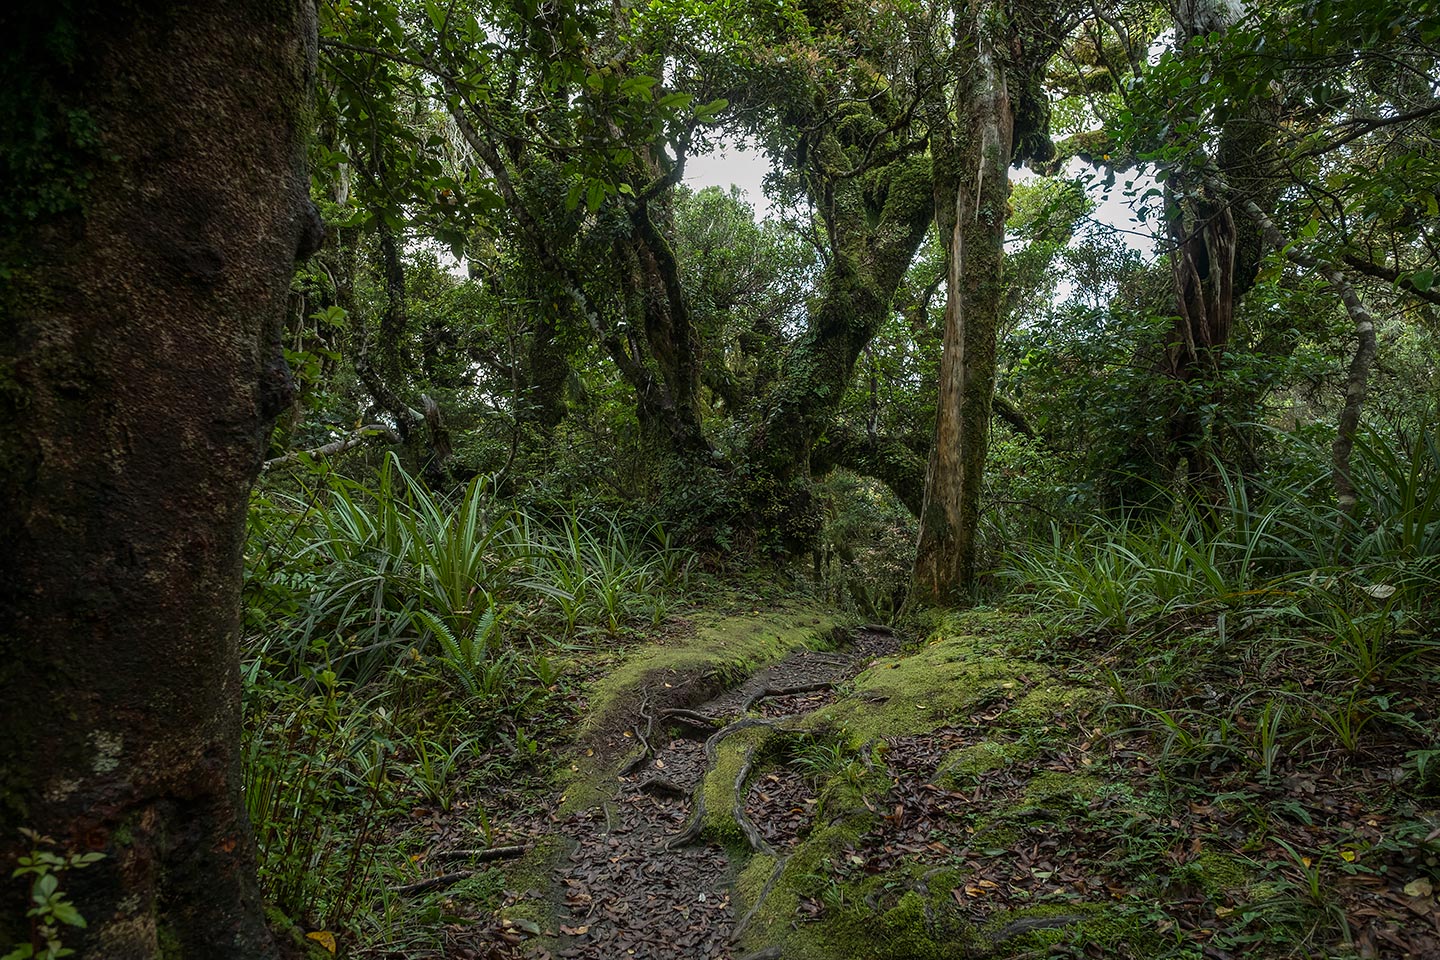 Veronica Loop, Egmont National Park, New Zealand